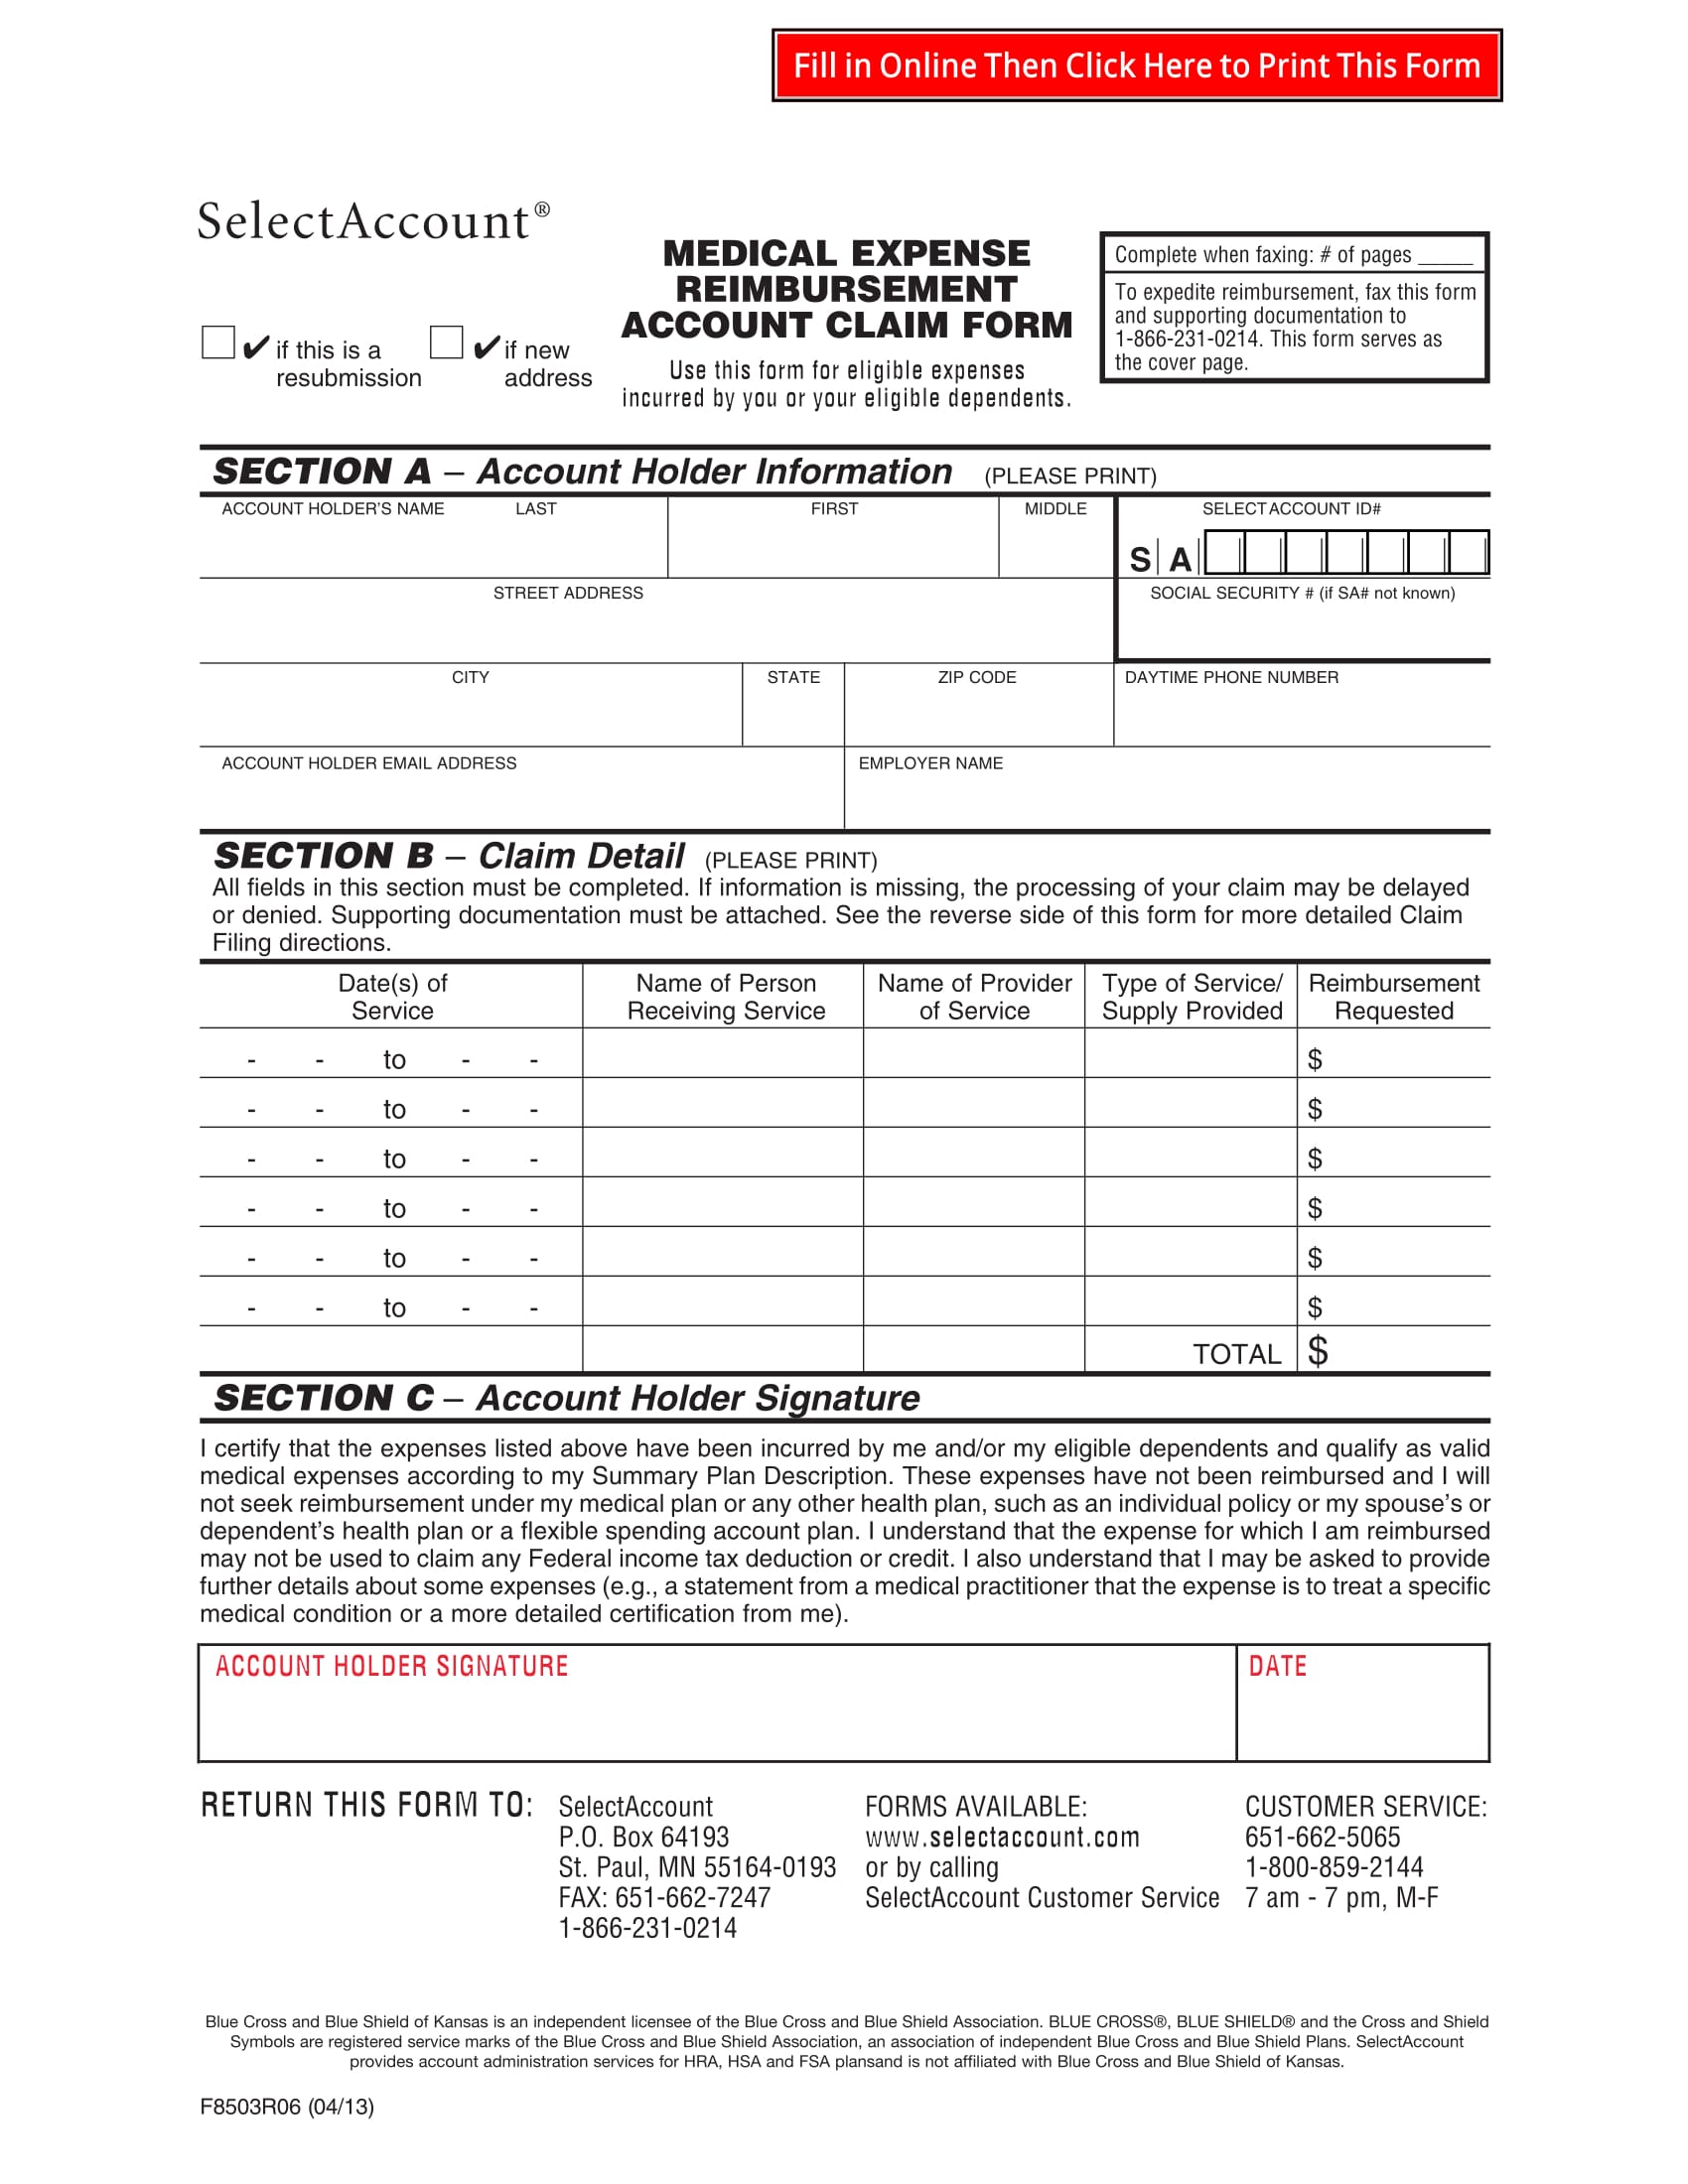 medical expense reimbursement account claim form 1